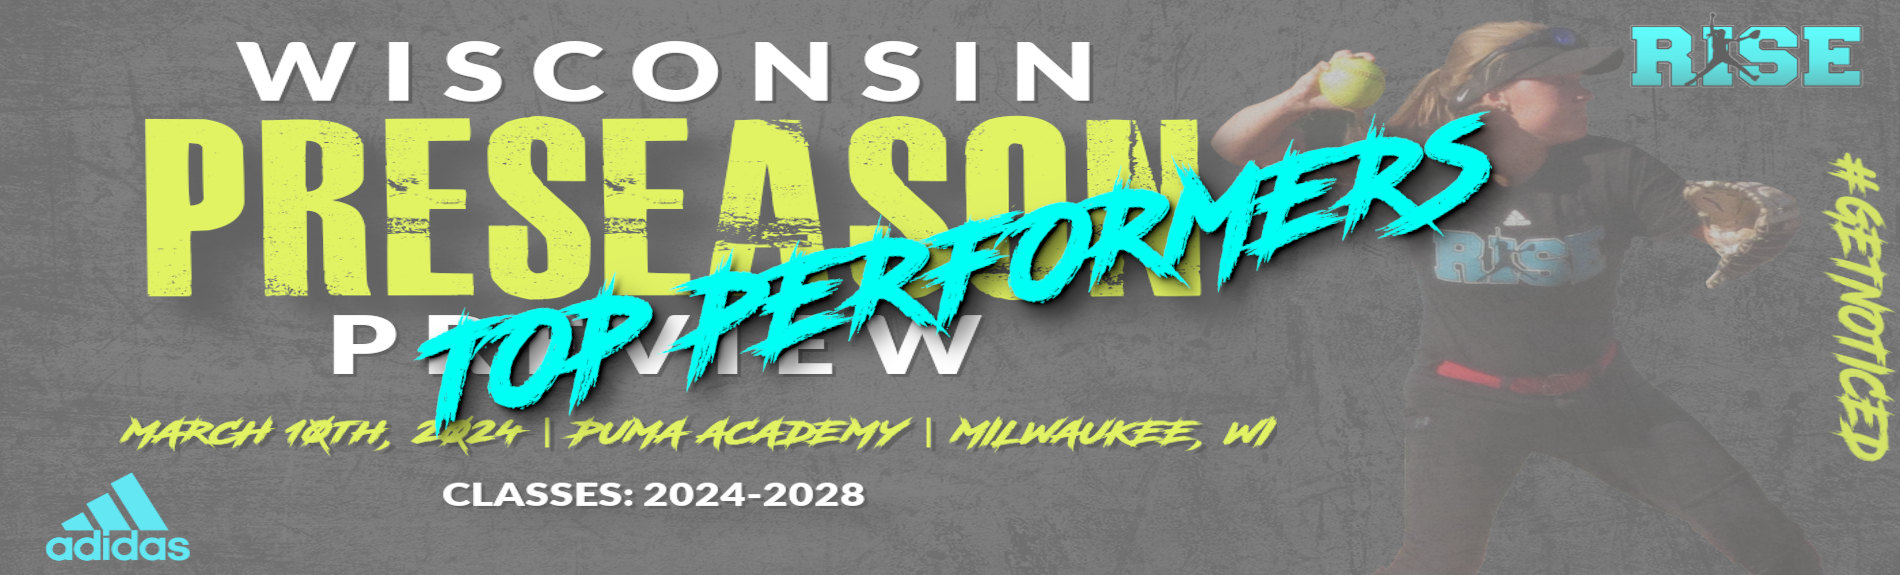 Wisconsin Preseason Preview “TOP PERFORMERS”